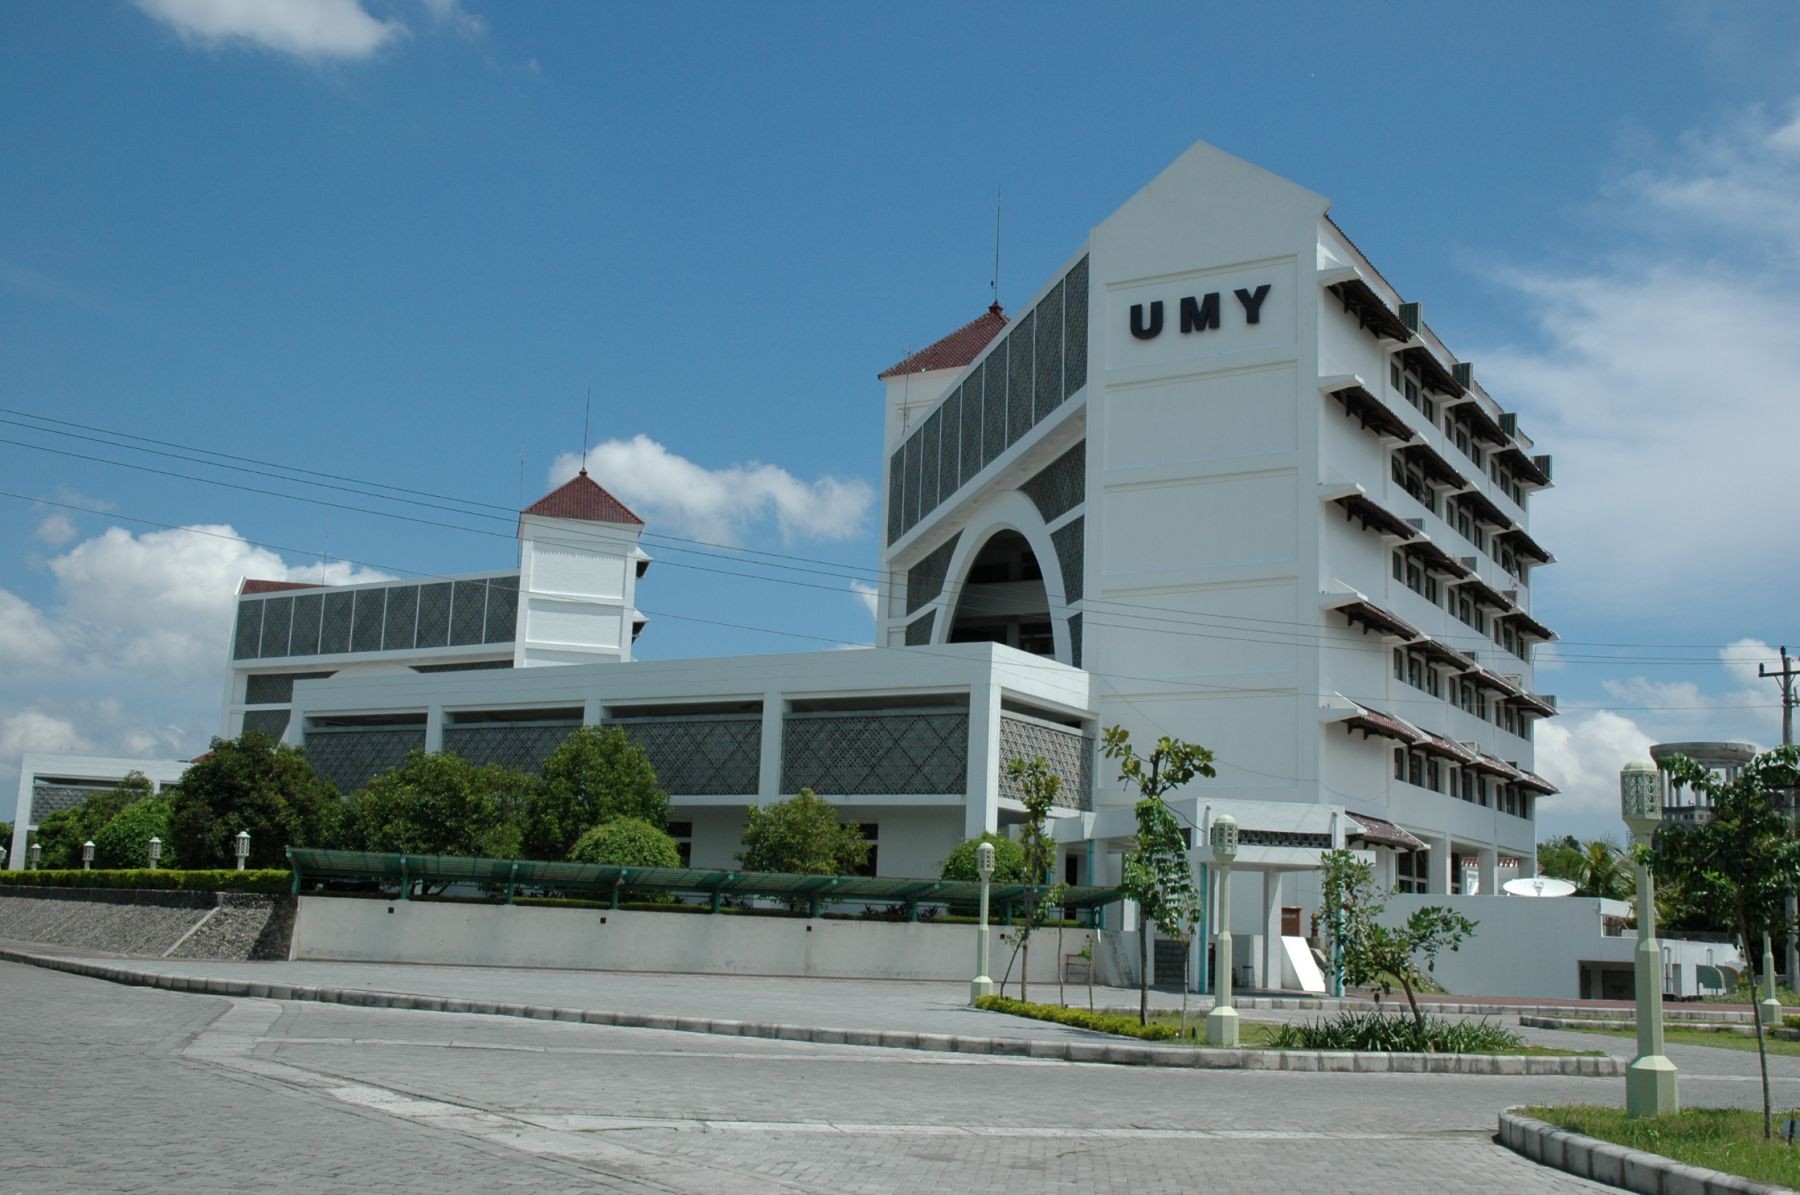 Universitas Serba Jaya